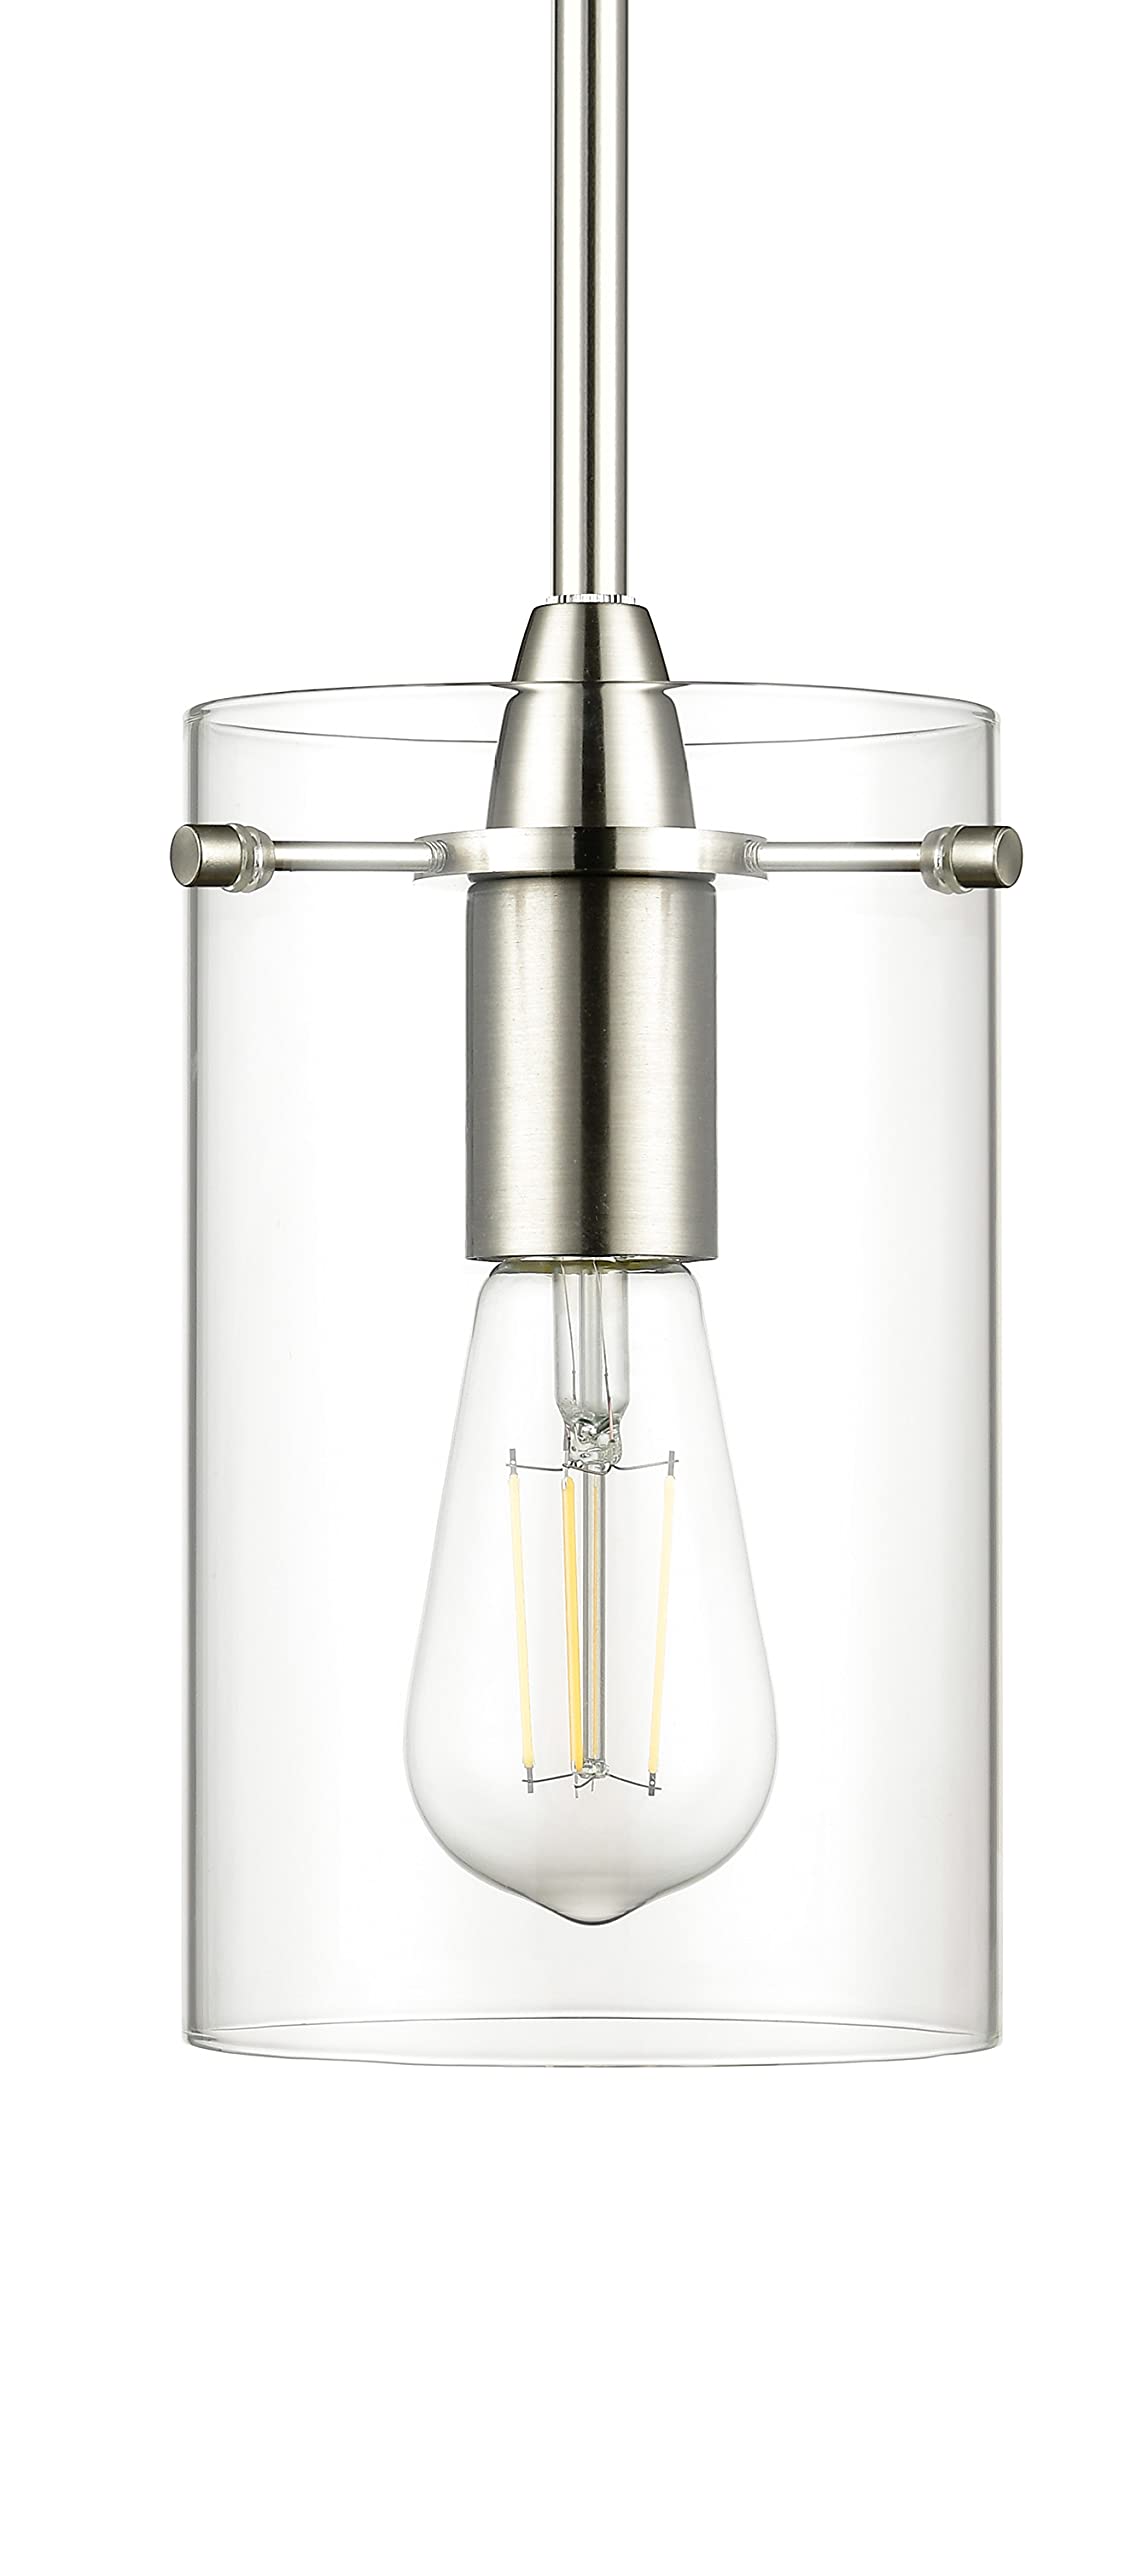 Brushed Nickel Pendant Lights Kitchen Island - Medium Clear Glass Pendant Light Fixture